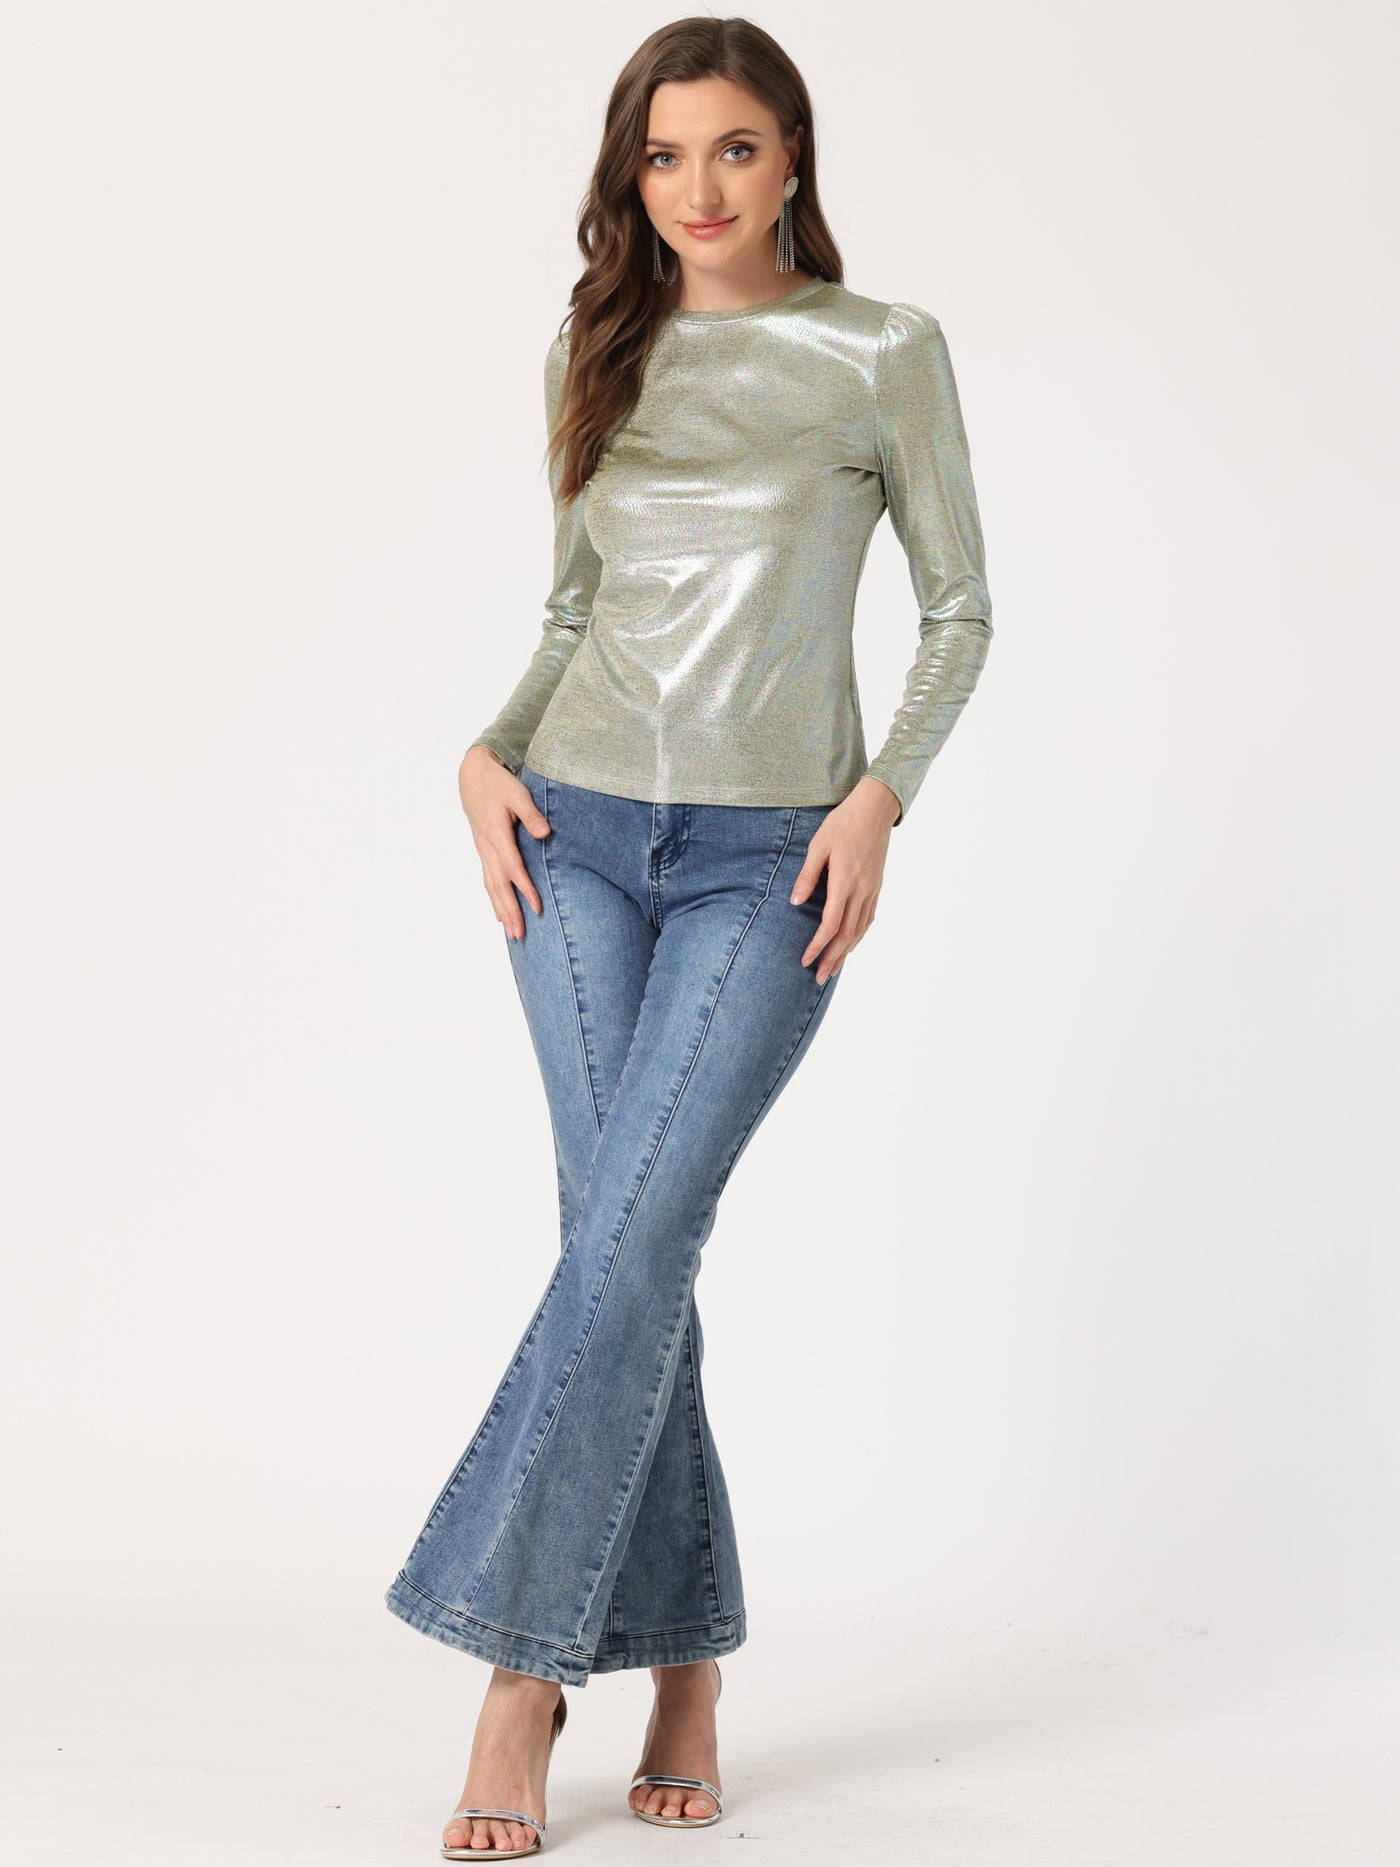 Allegra K Long Sleeve Sparkly Party Glitter Shiny Metallic Shirt